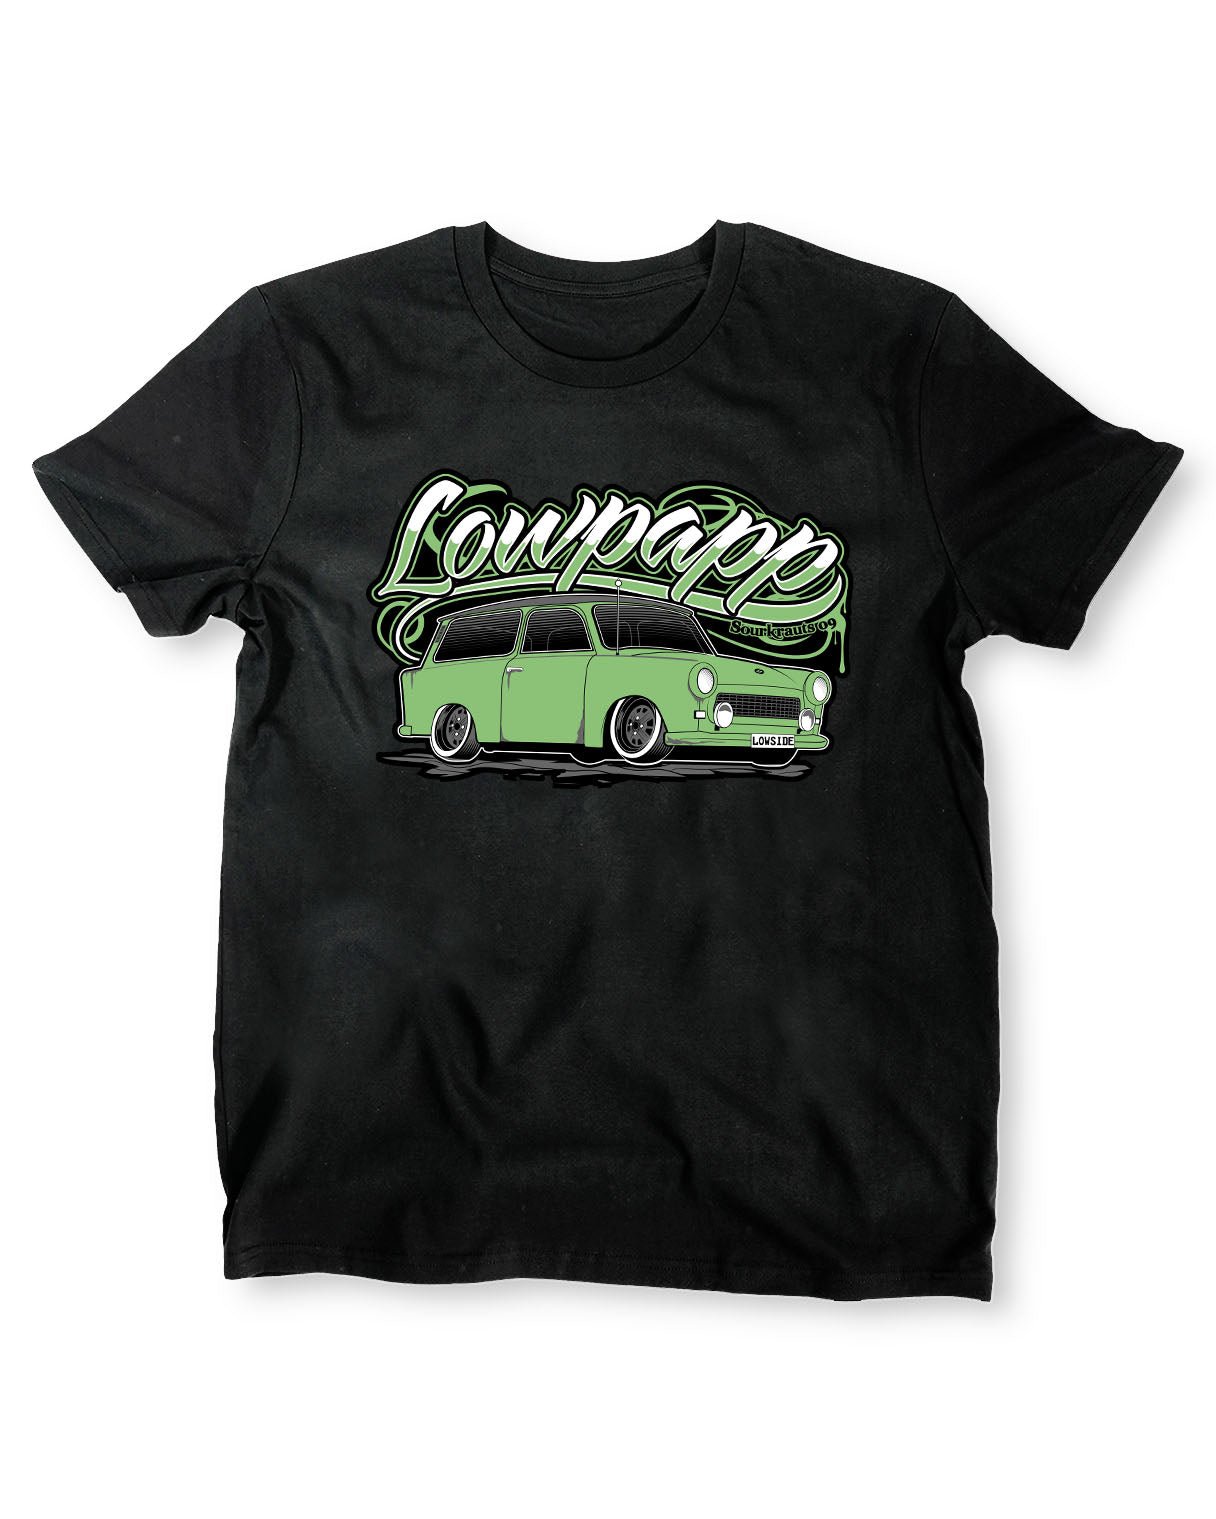 Lowpapp I T-Shirt I 2009 - Sourkrauts Classics